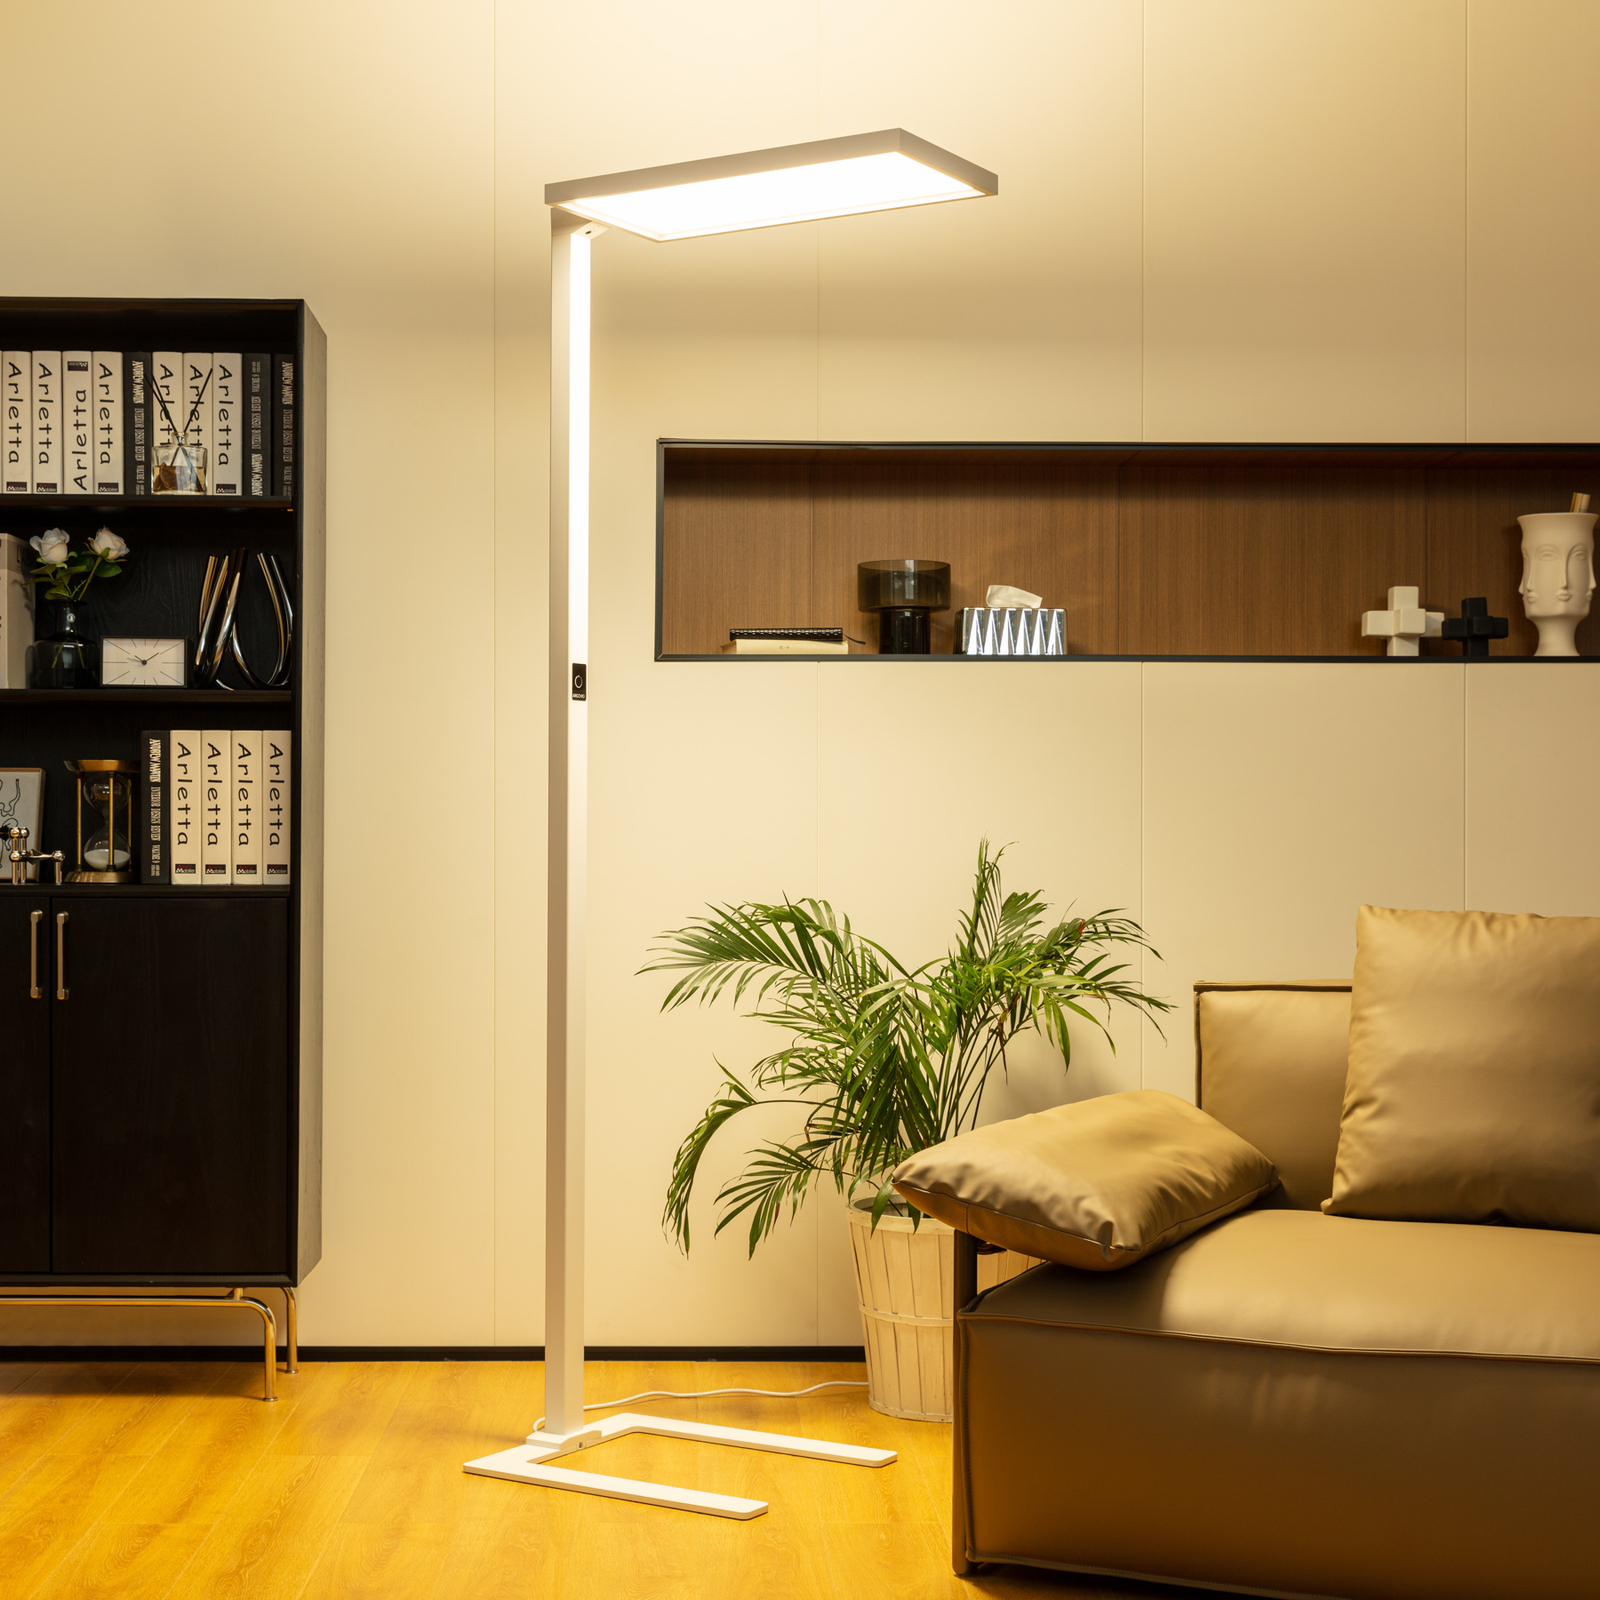 Arcchio Nelus Büro-LED-Stehlampe, Sensor, weiß